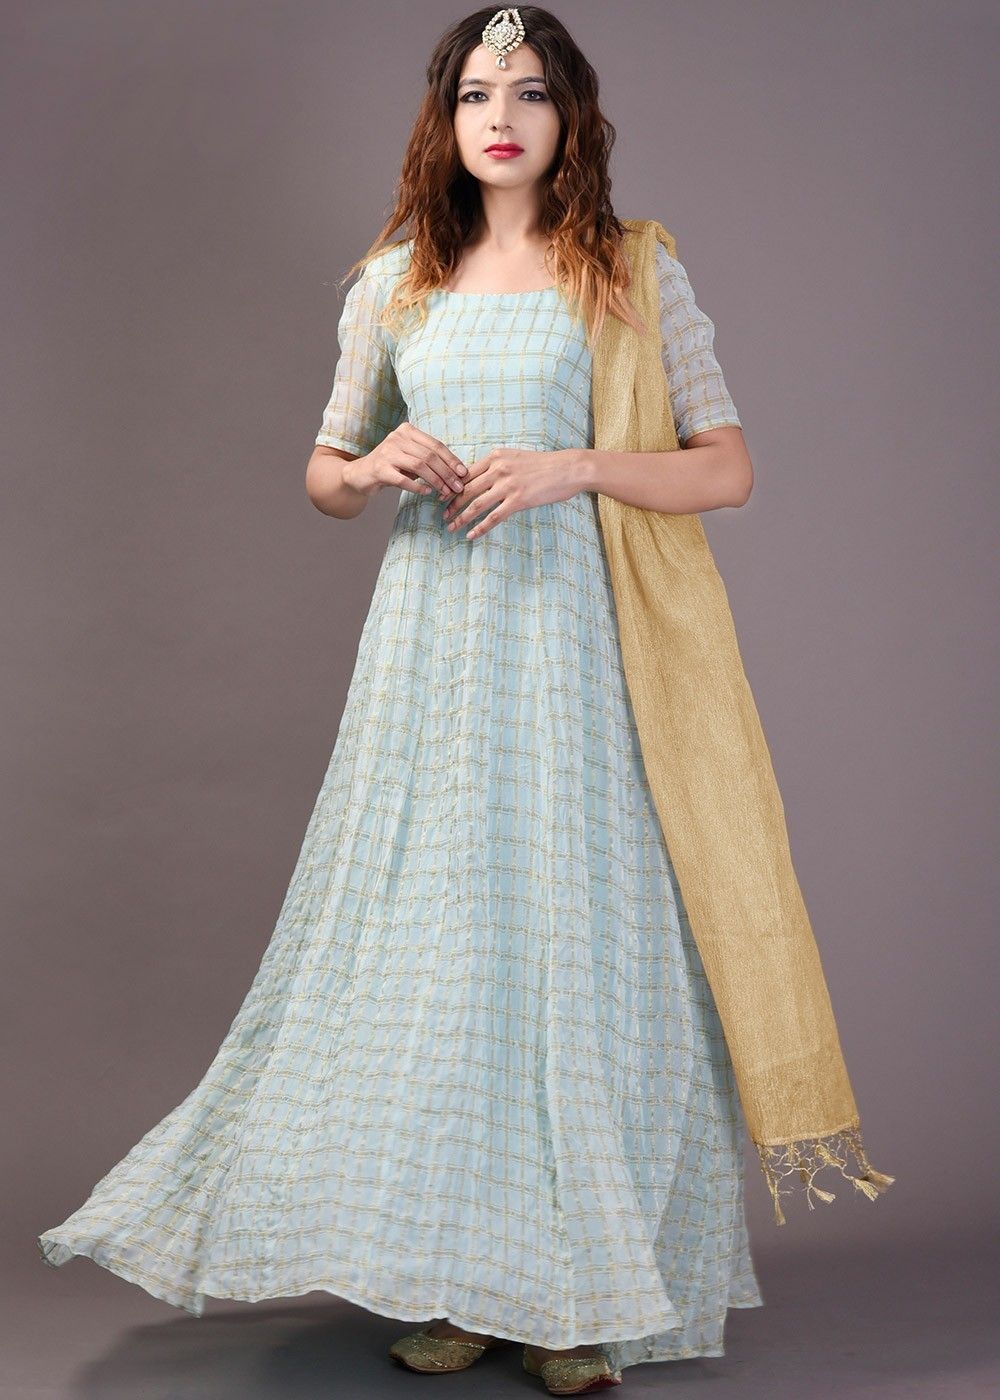 Sky Blue Georgette Semi-stitched Salwar Suit Dress Material at Rs 838 |  Georgette Semi Stitched Suit in Chennai | ID: 11854216797